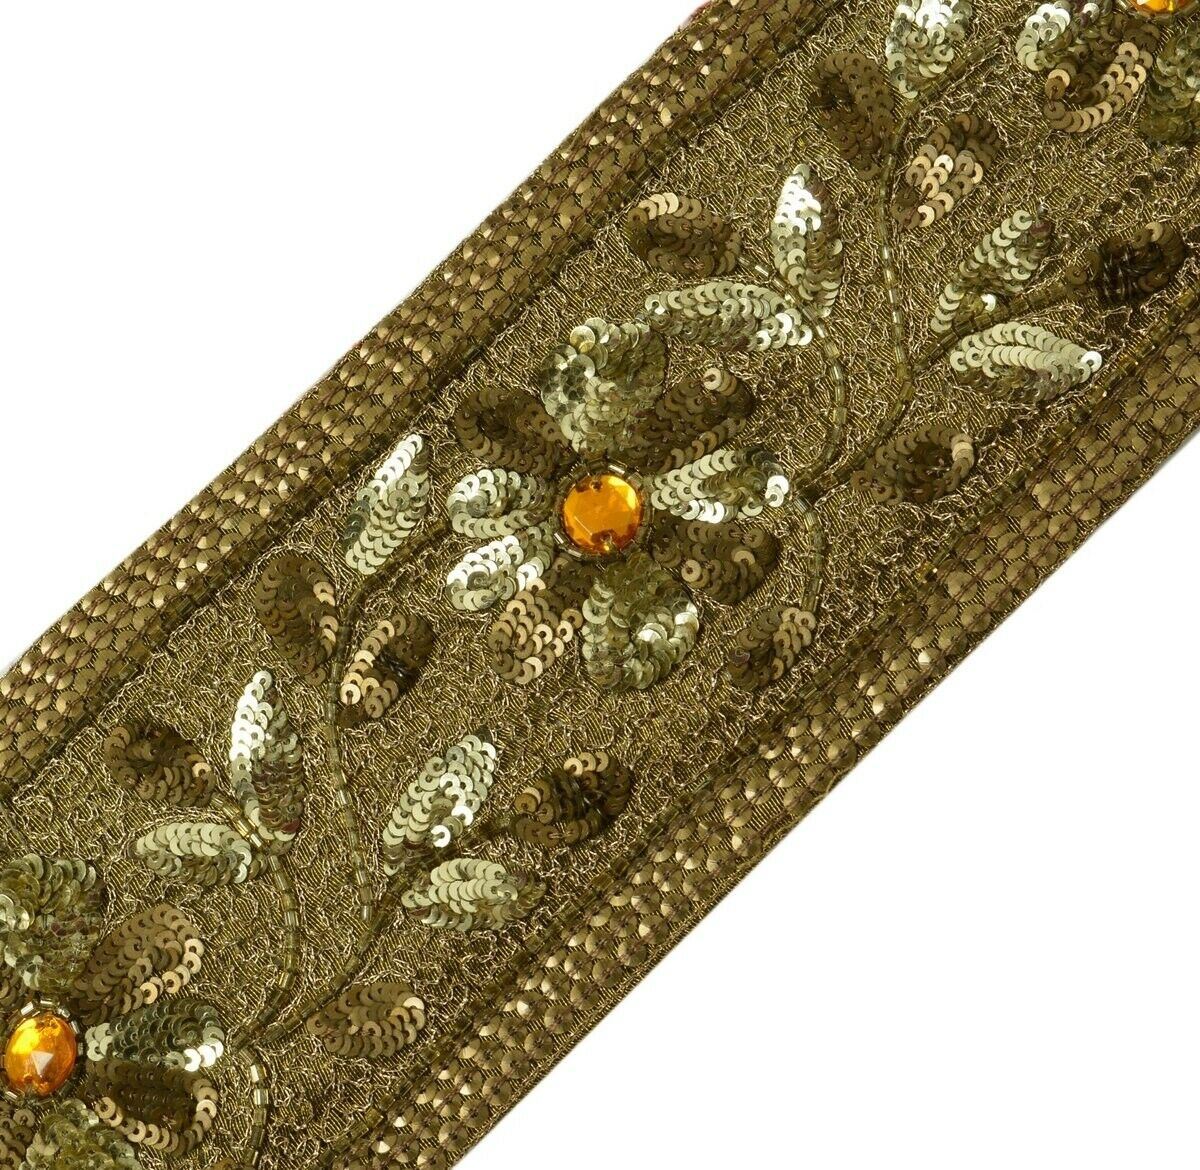 Vintage Sari Border Indian Craft Trim Beaded Embroidered Ribbon Antique Color